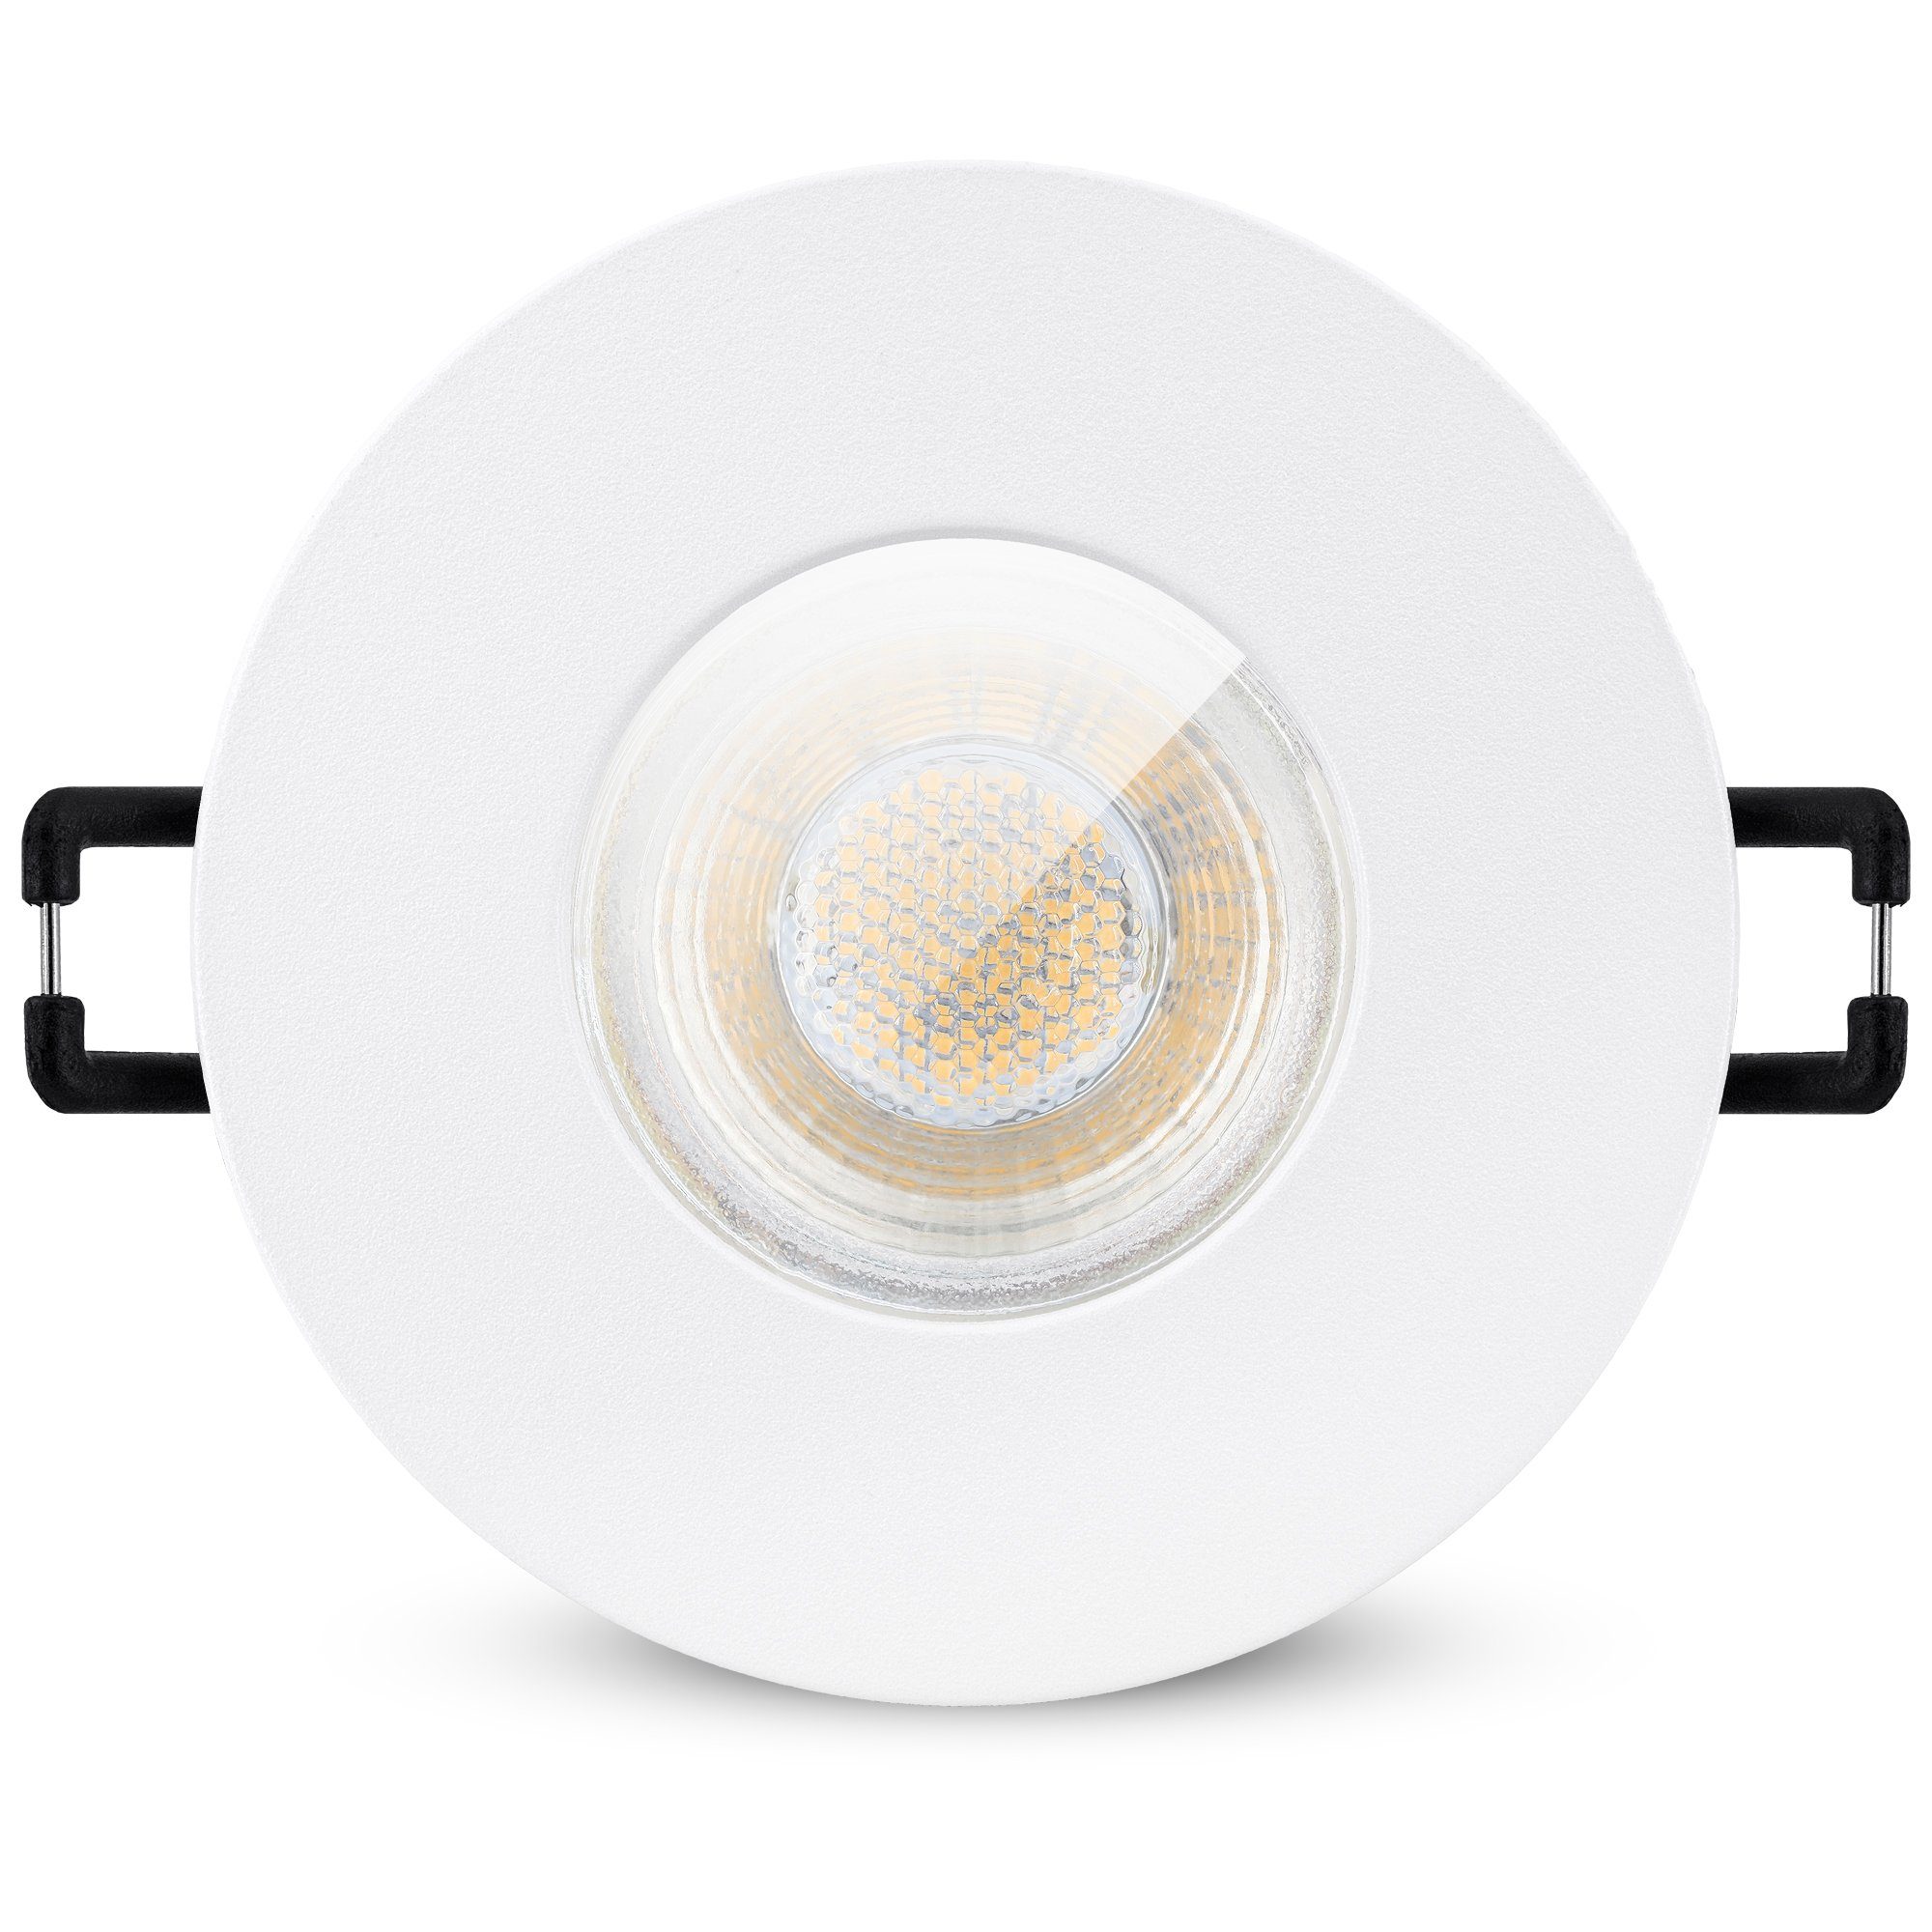 linovum LED Einbaustrahler 10er Set Leuchtmittel neutralweiss LED 3W GU10 inklusive, Spot, Leuchtmittel 230V - IP65 inklusive Einbaustrahler